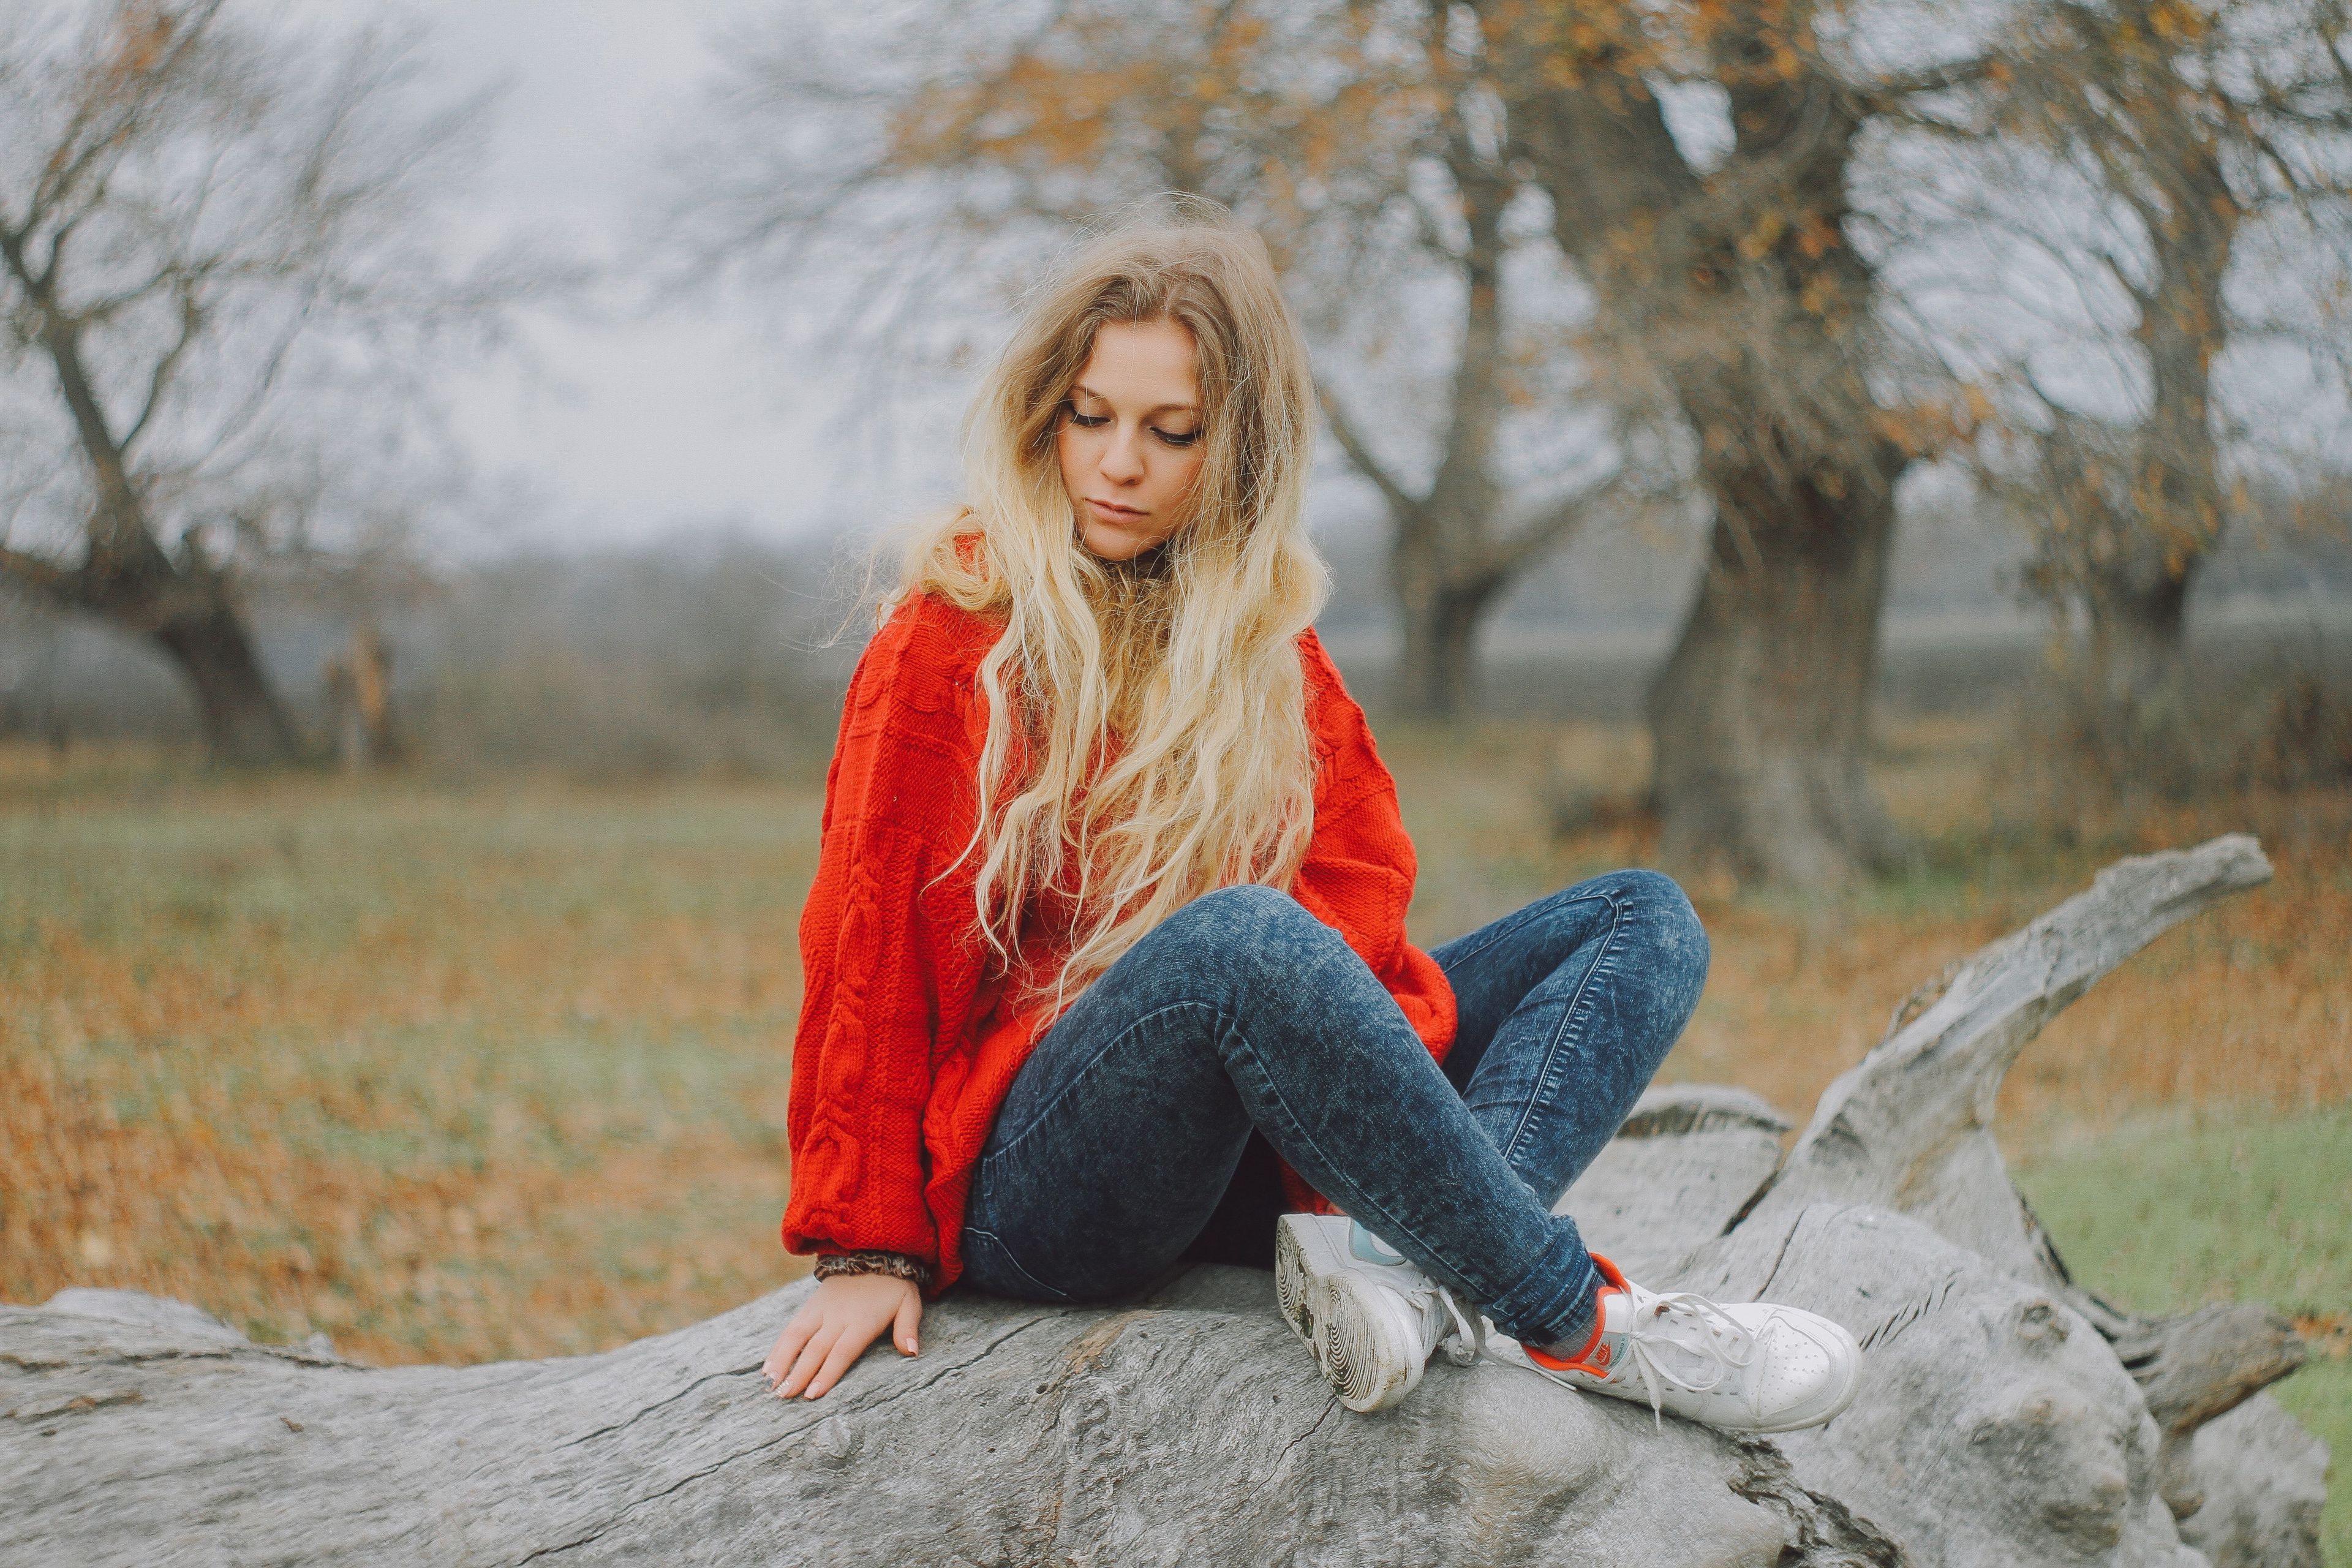 Girl in read sweater sitting on log